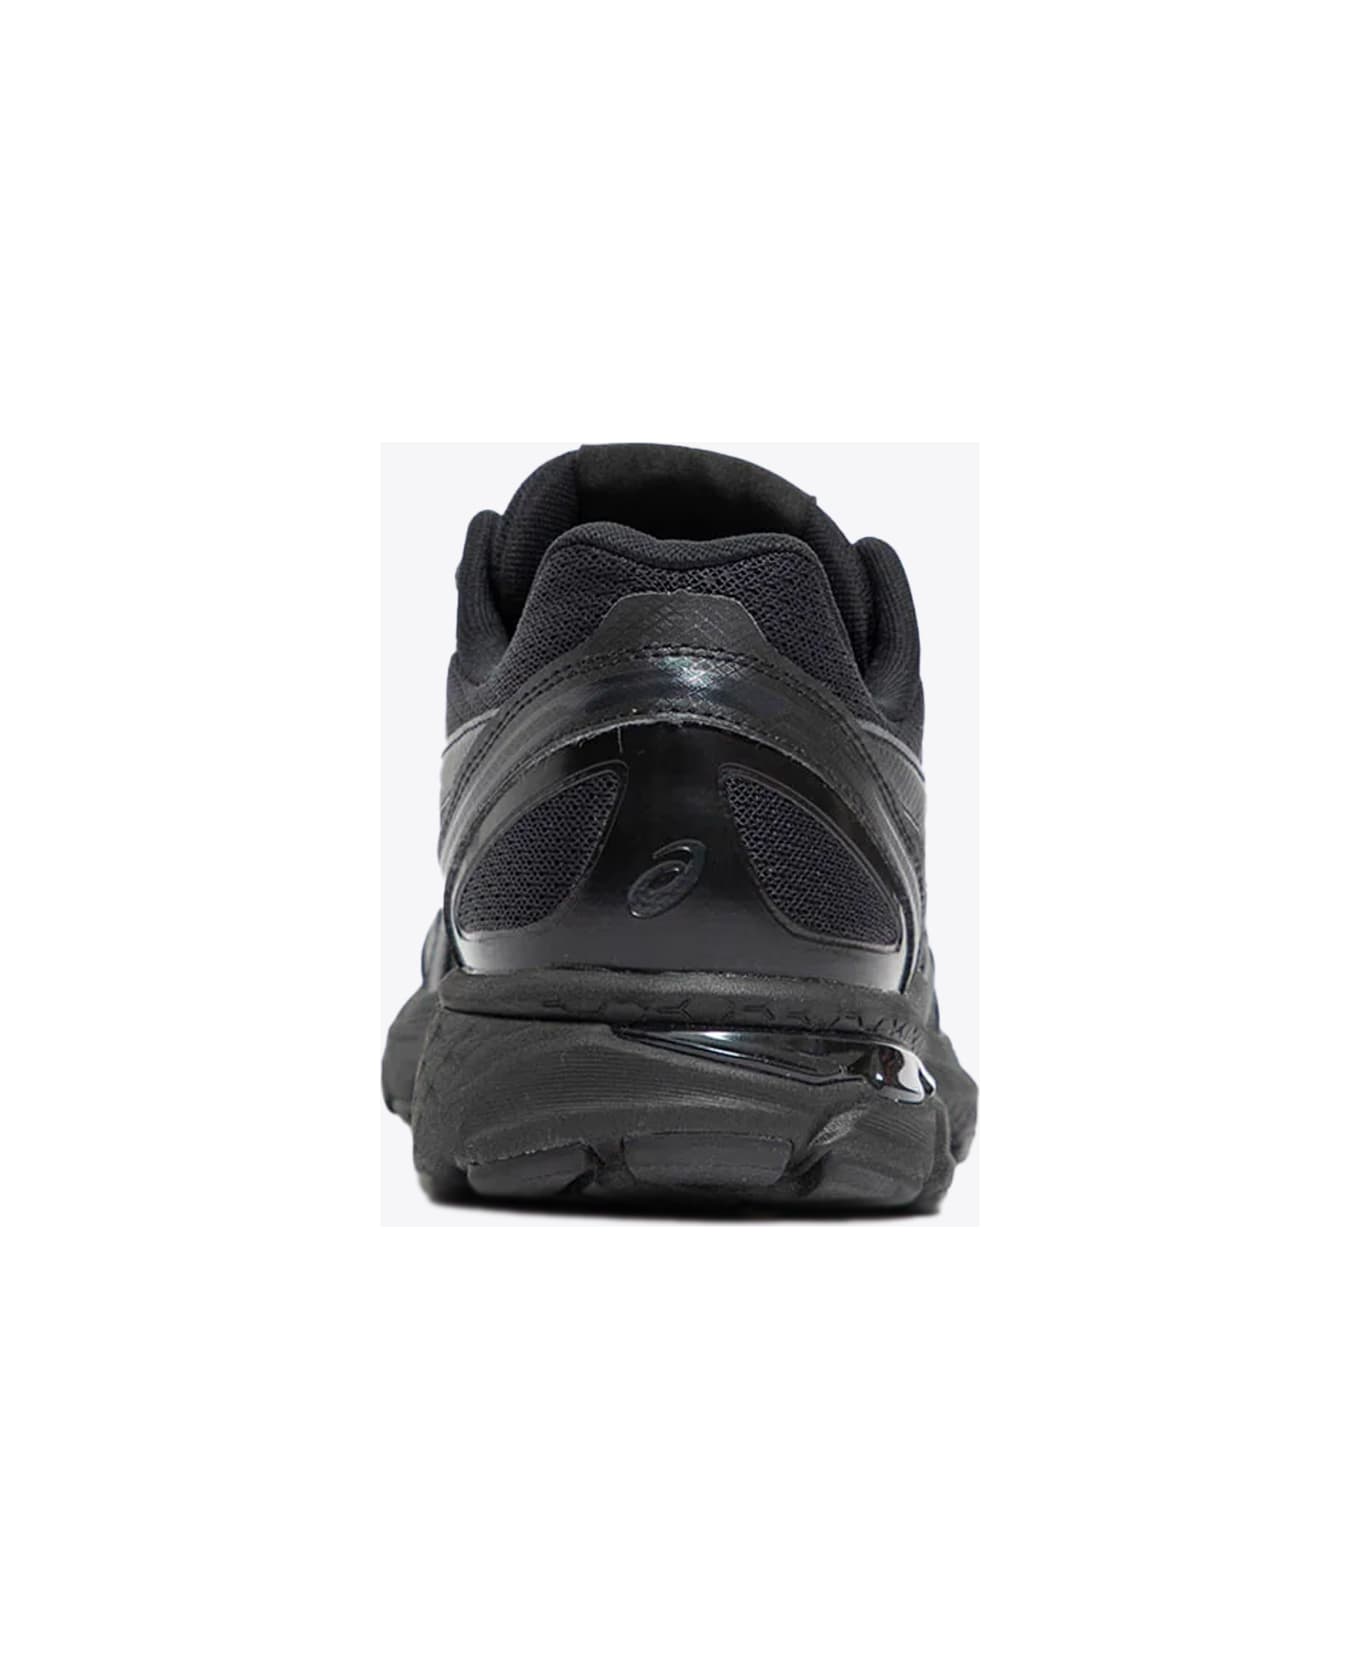 Comme des Garçons Shirt Mens Sneakers X Asics Asics collaboration black mesh and leather running sneaker - Nero スニーカー